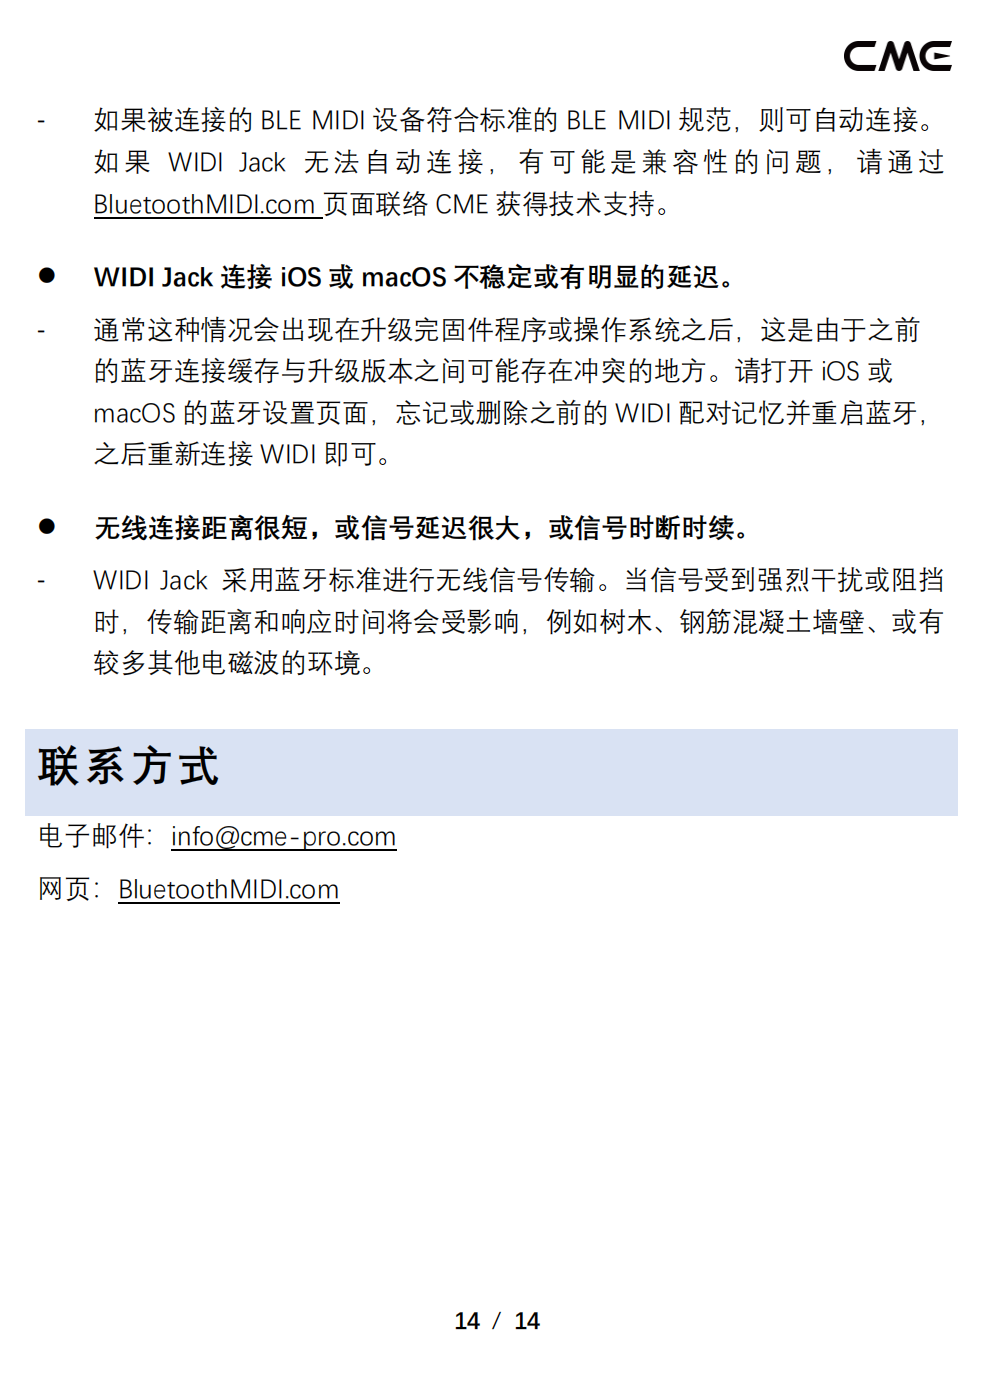 WIDI Jack Owner's manual_v06_mobile view_cn_13.png